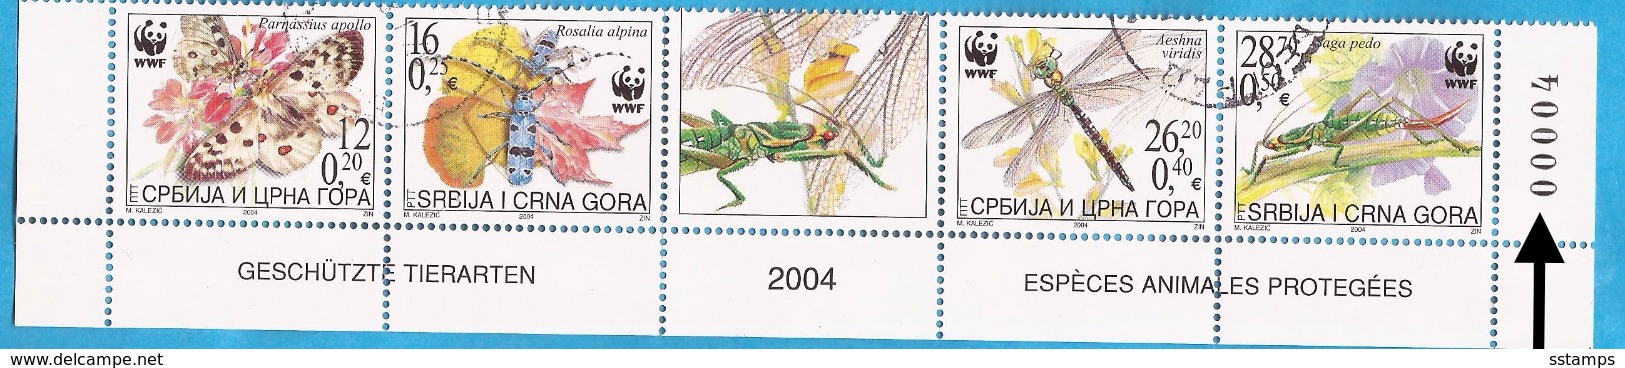 2004  317376  WWF INSETTI FARFALLE JUGOSLAVIJA JUGOSLAWIEN SRBIJA SERBIEN CRNA GORA MONTENEGRO USED - Gebruikt